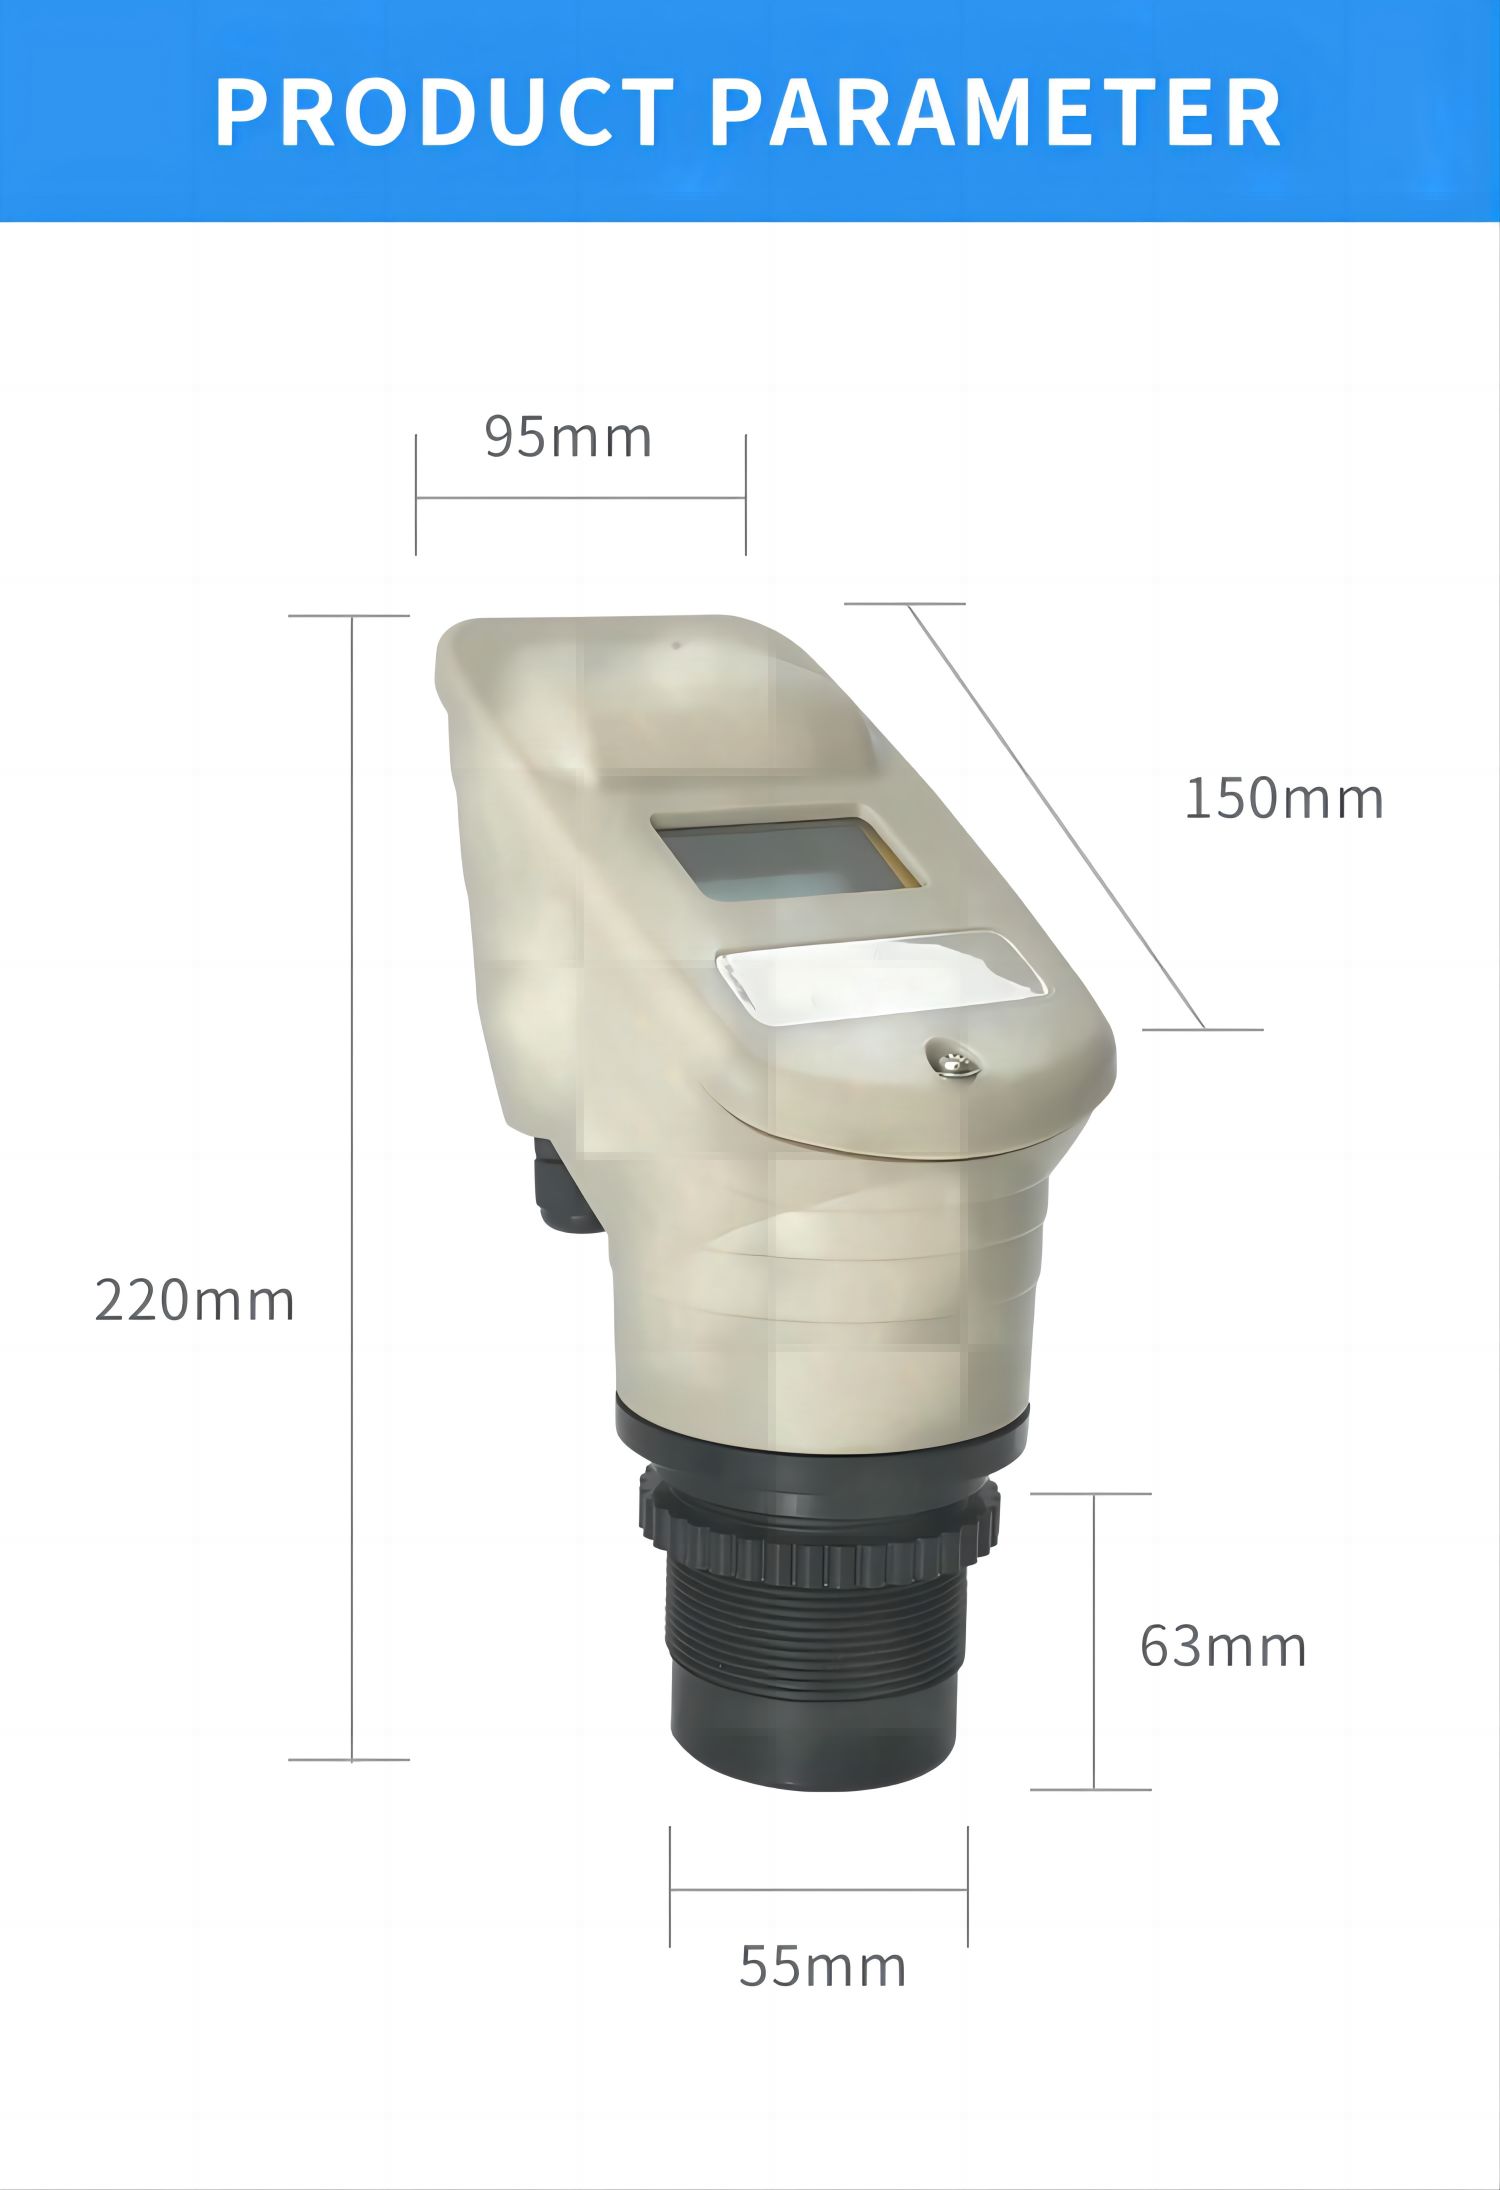 Water Level Ultrasonic Sensor detailed measurement